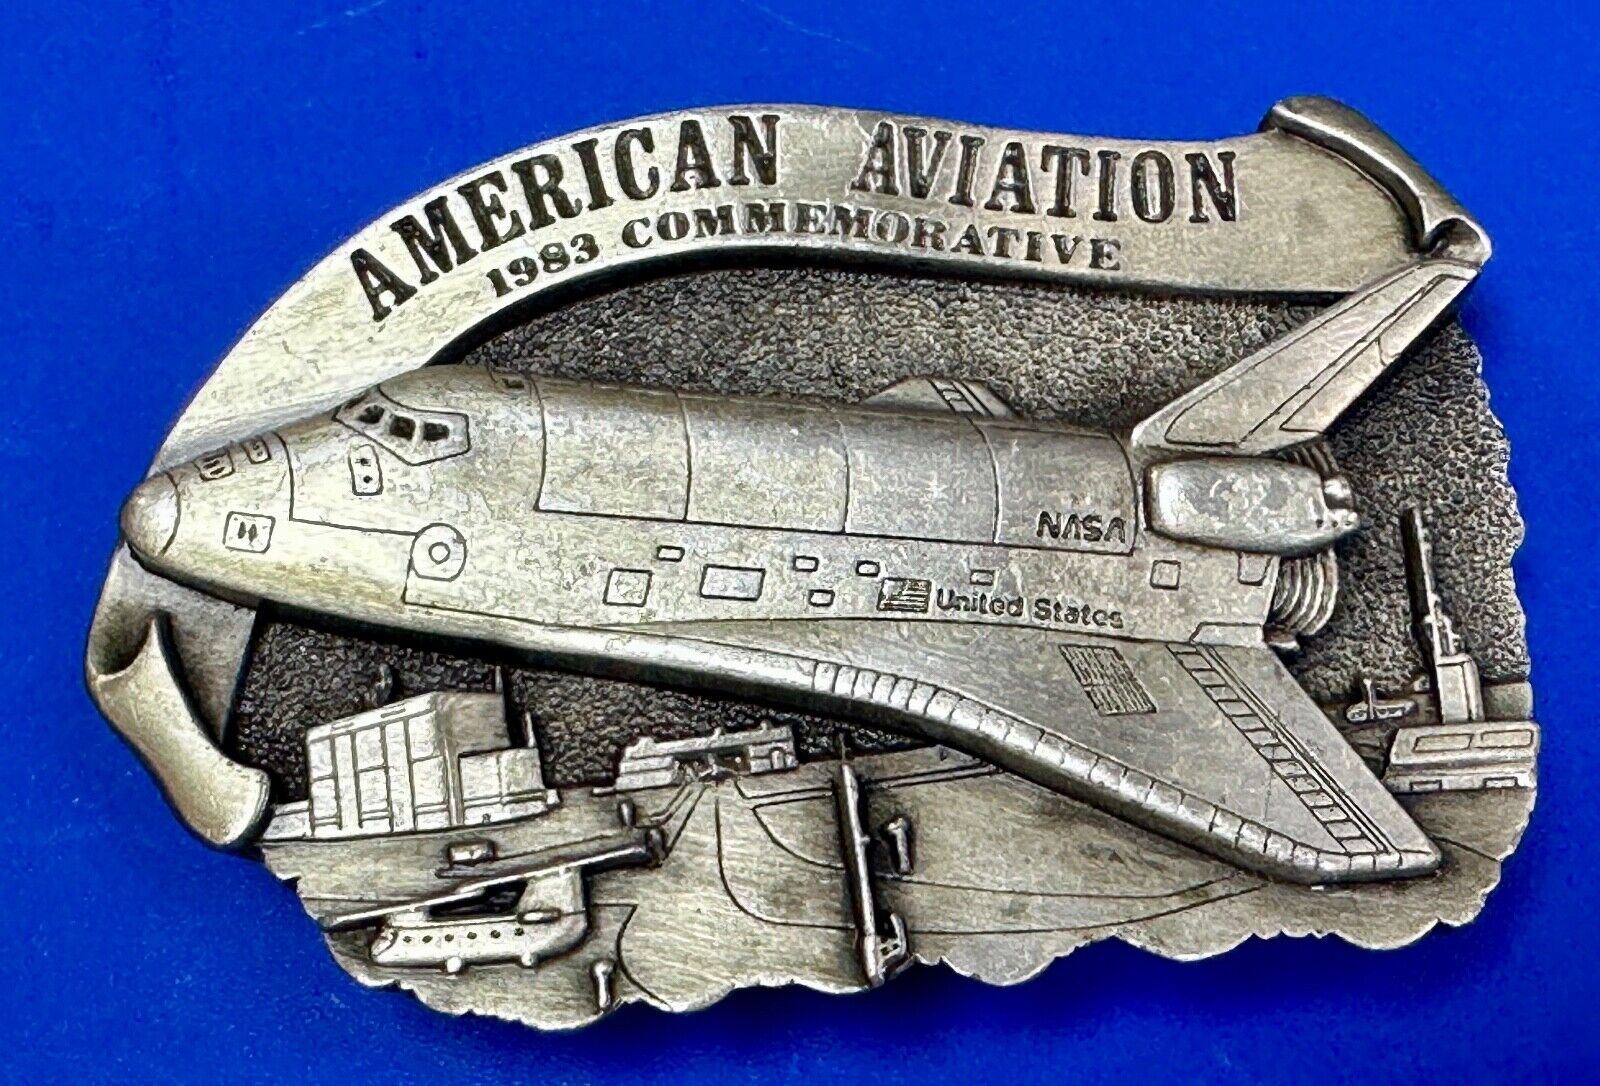 1983 American Aviation Commemorative Plane Pilots belt buckle by Arroyo Grande